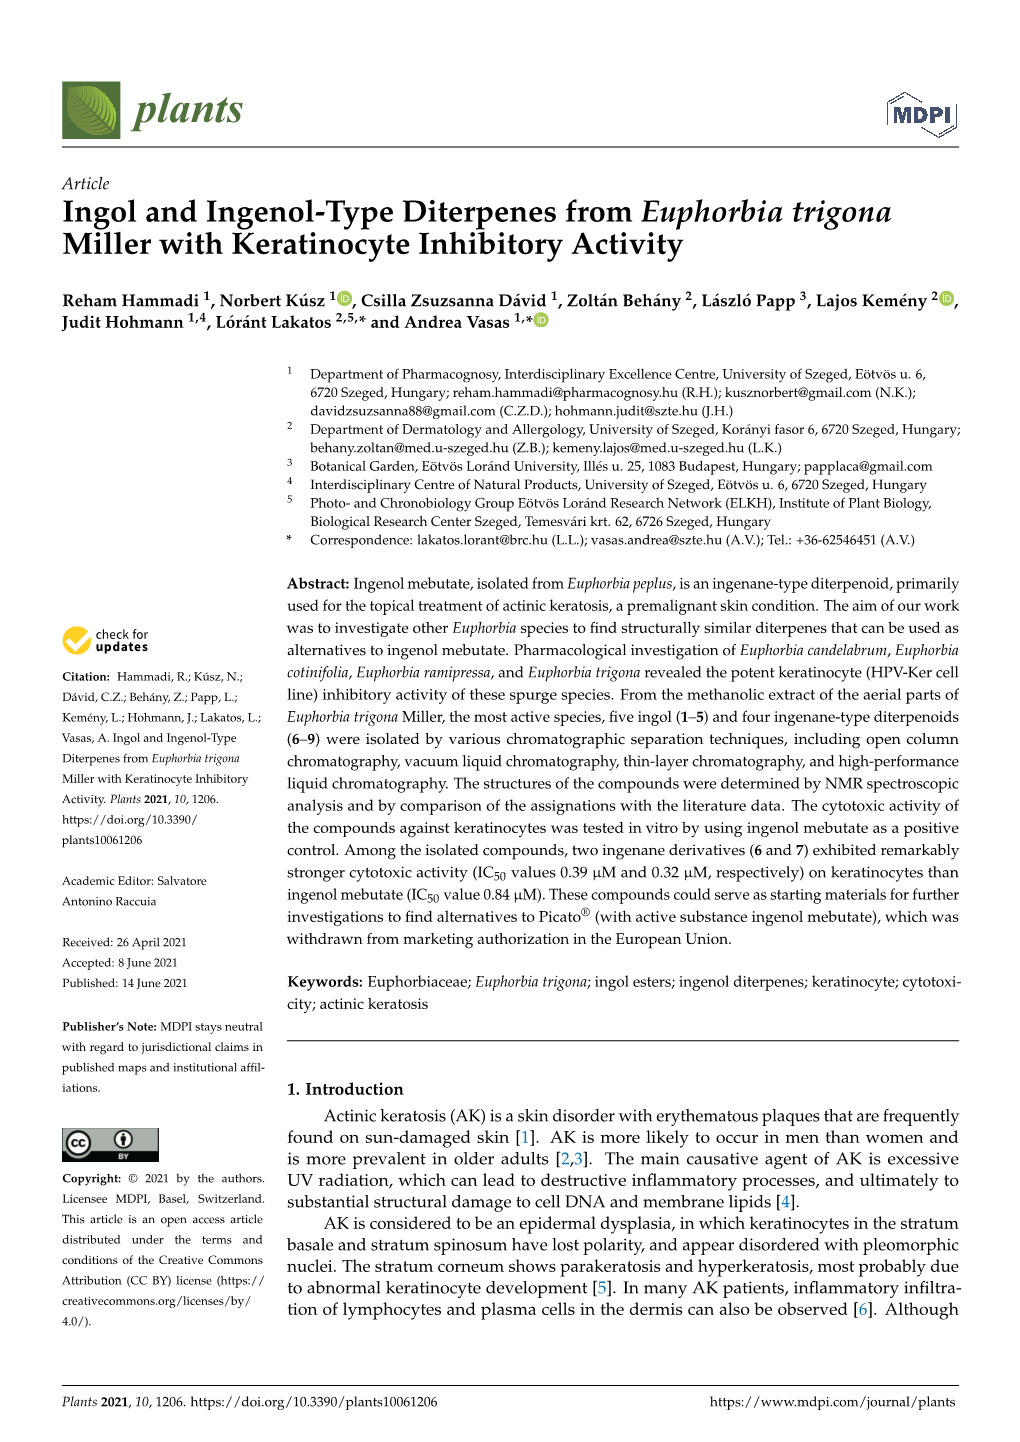 Ingol and Ingenol-Type Diterpenes from Euphorbia Trigona Miller with Keratinocyte Inhibitory Activity